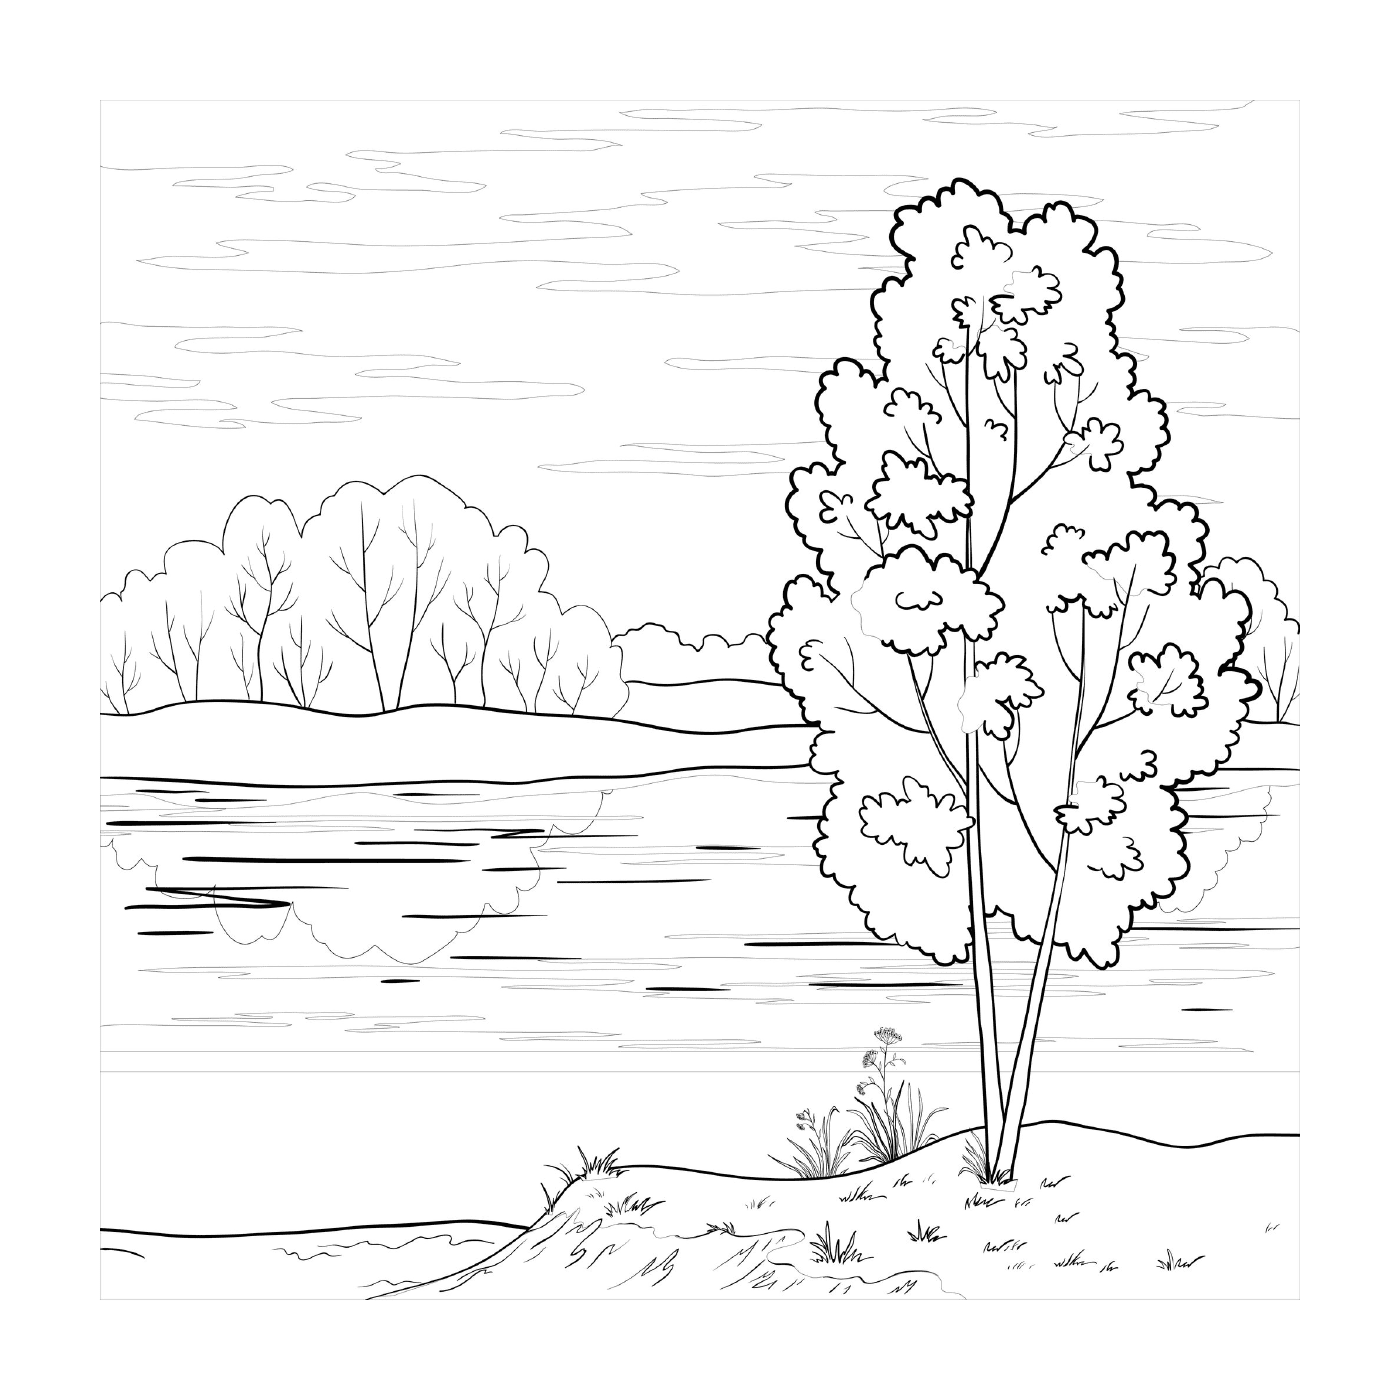  Дерево у озера 